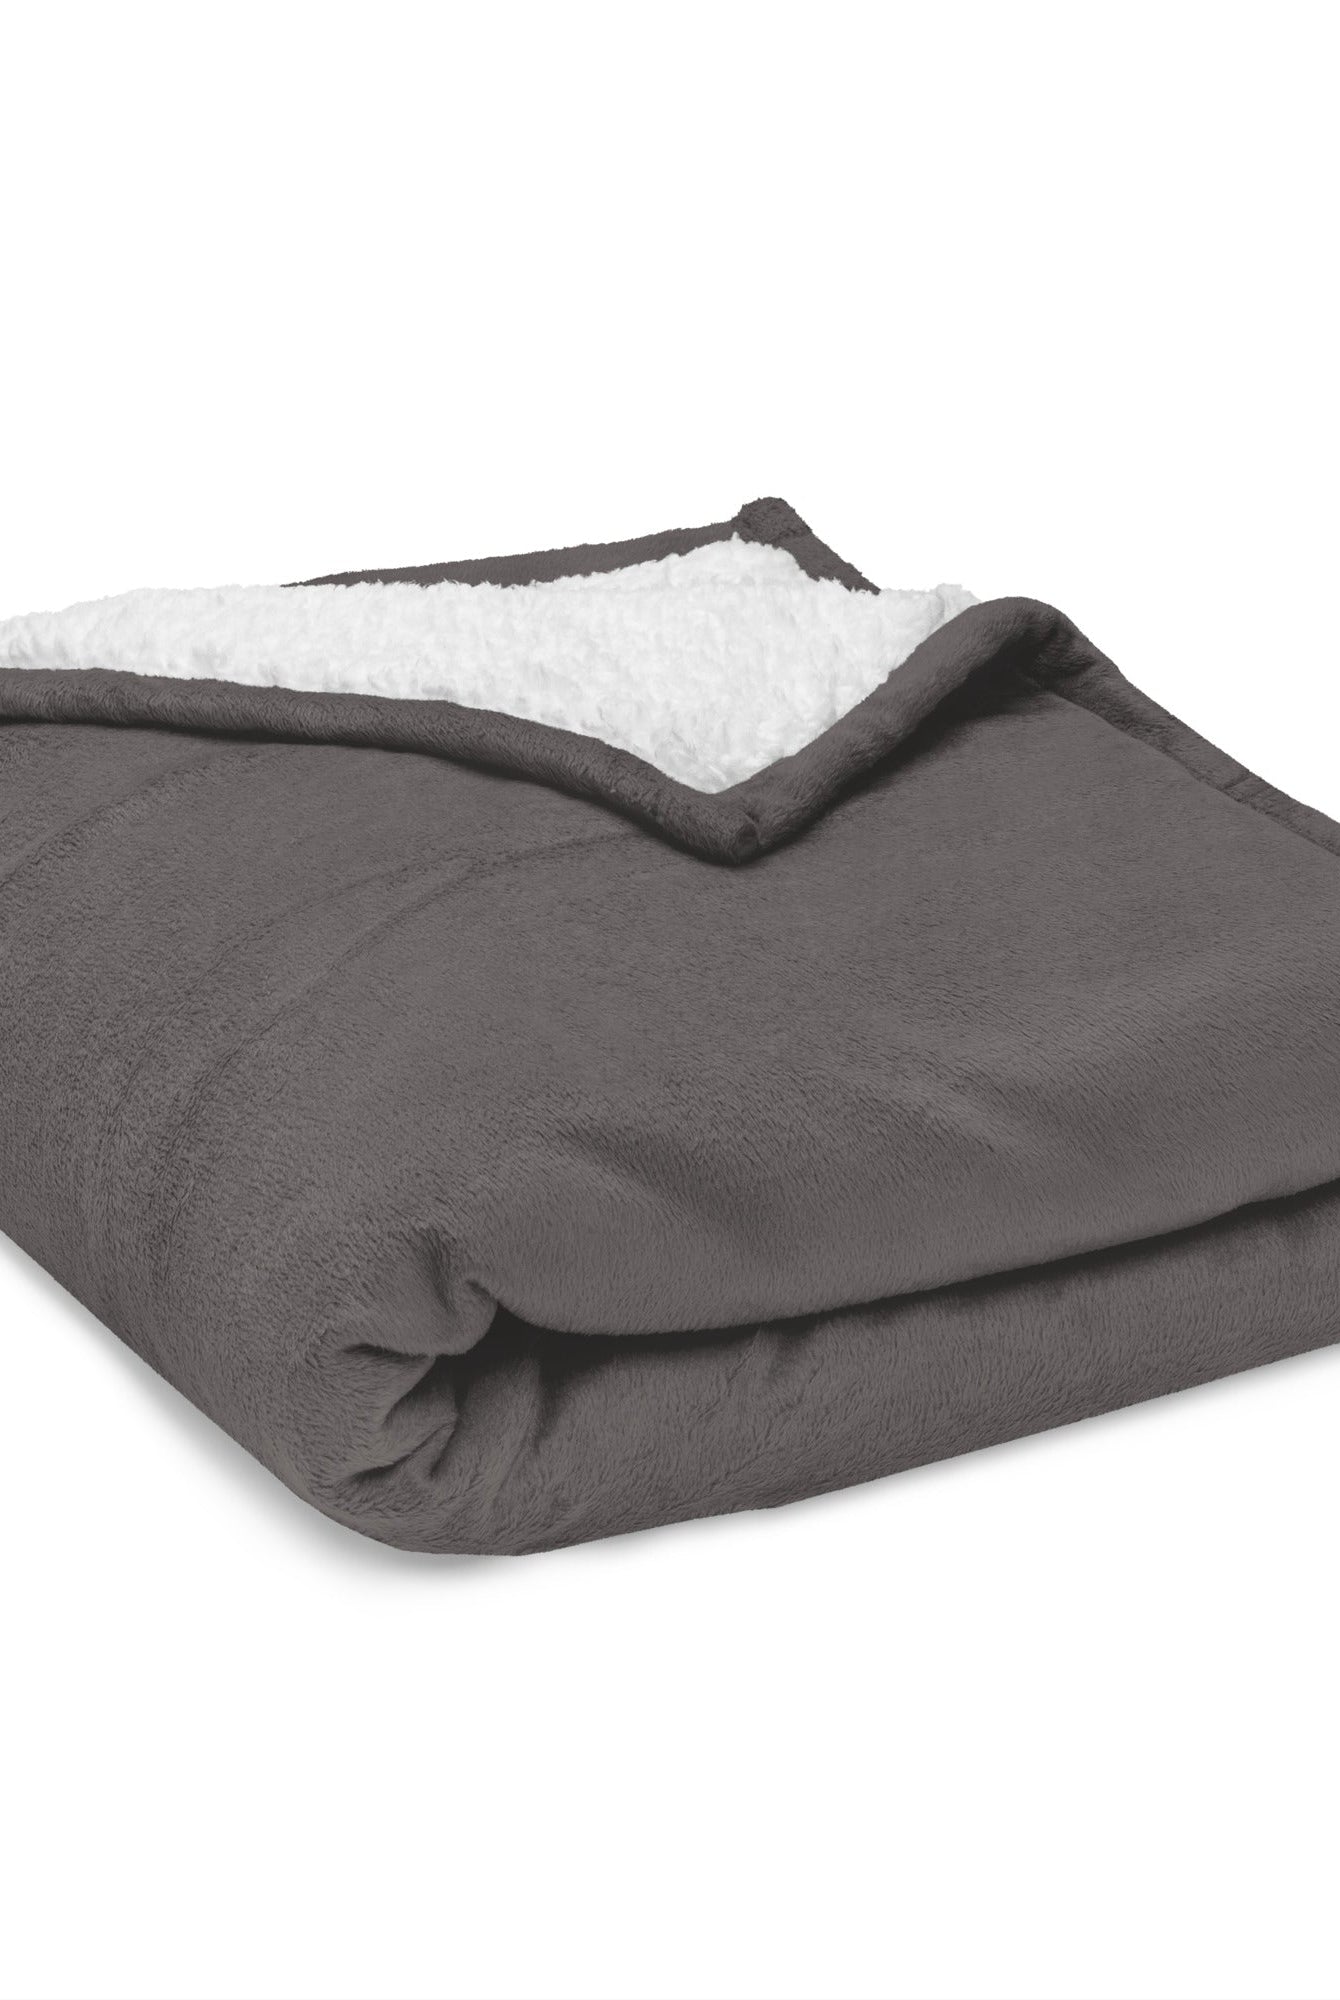 Dragon Foxx™ Premium sherpa blanket - Premium sherpa blanket - DRAGON FOXX™ - Dragon Foxx™ Premium sherpa blanket - 9801917_13444 - Black - 50″×60″ - Sherpa - Fleece Blanket - 50″×60″ blanket - 50″×60″ Sherpa Blanket - Black Premium sherpa blanket